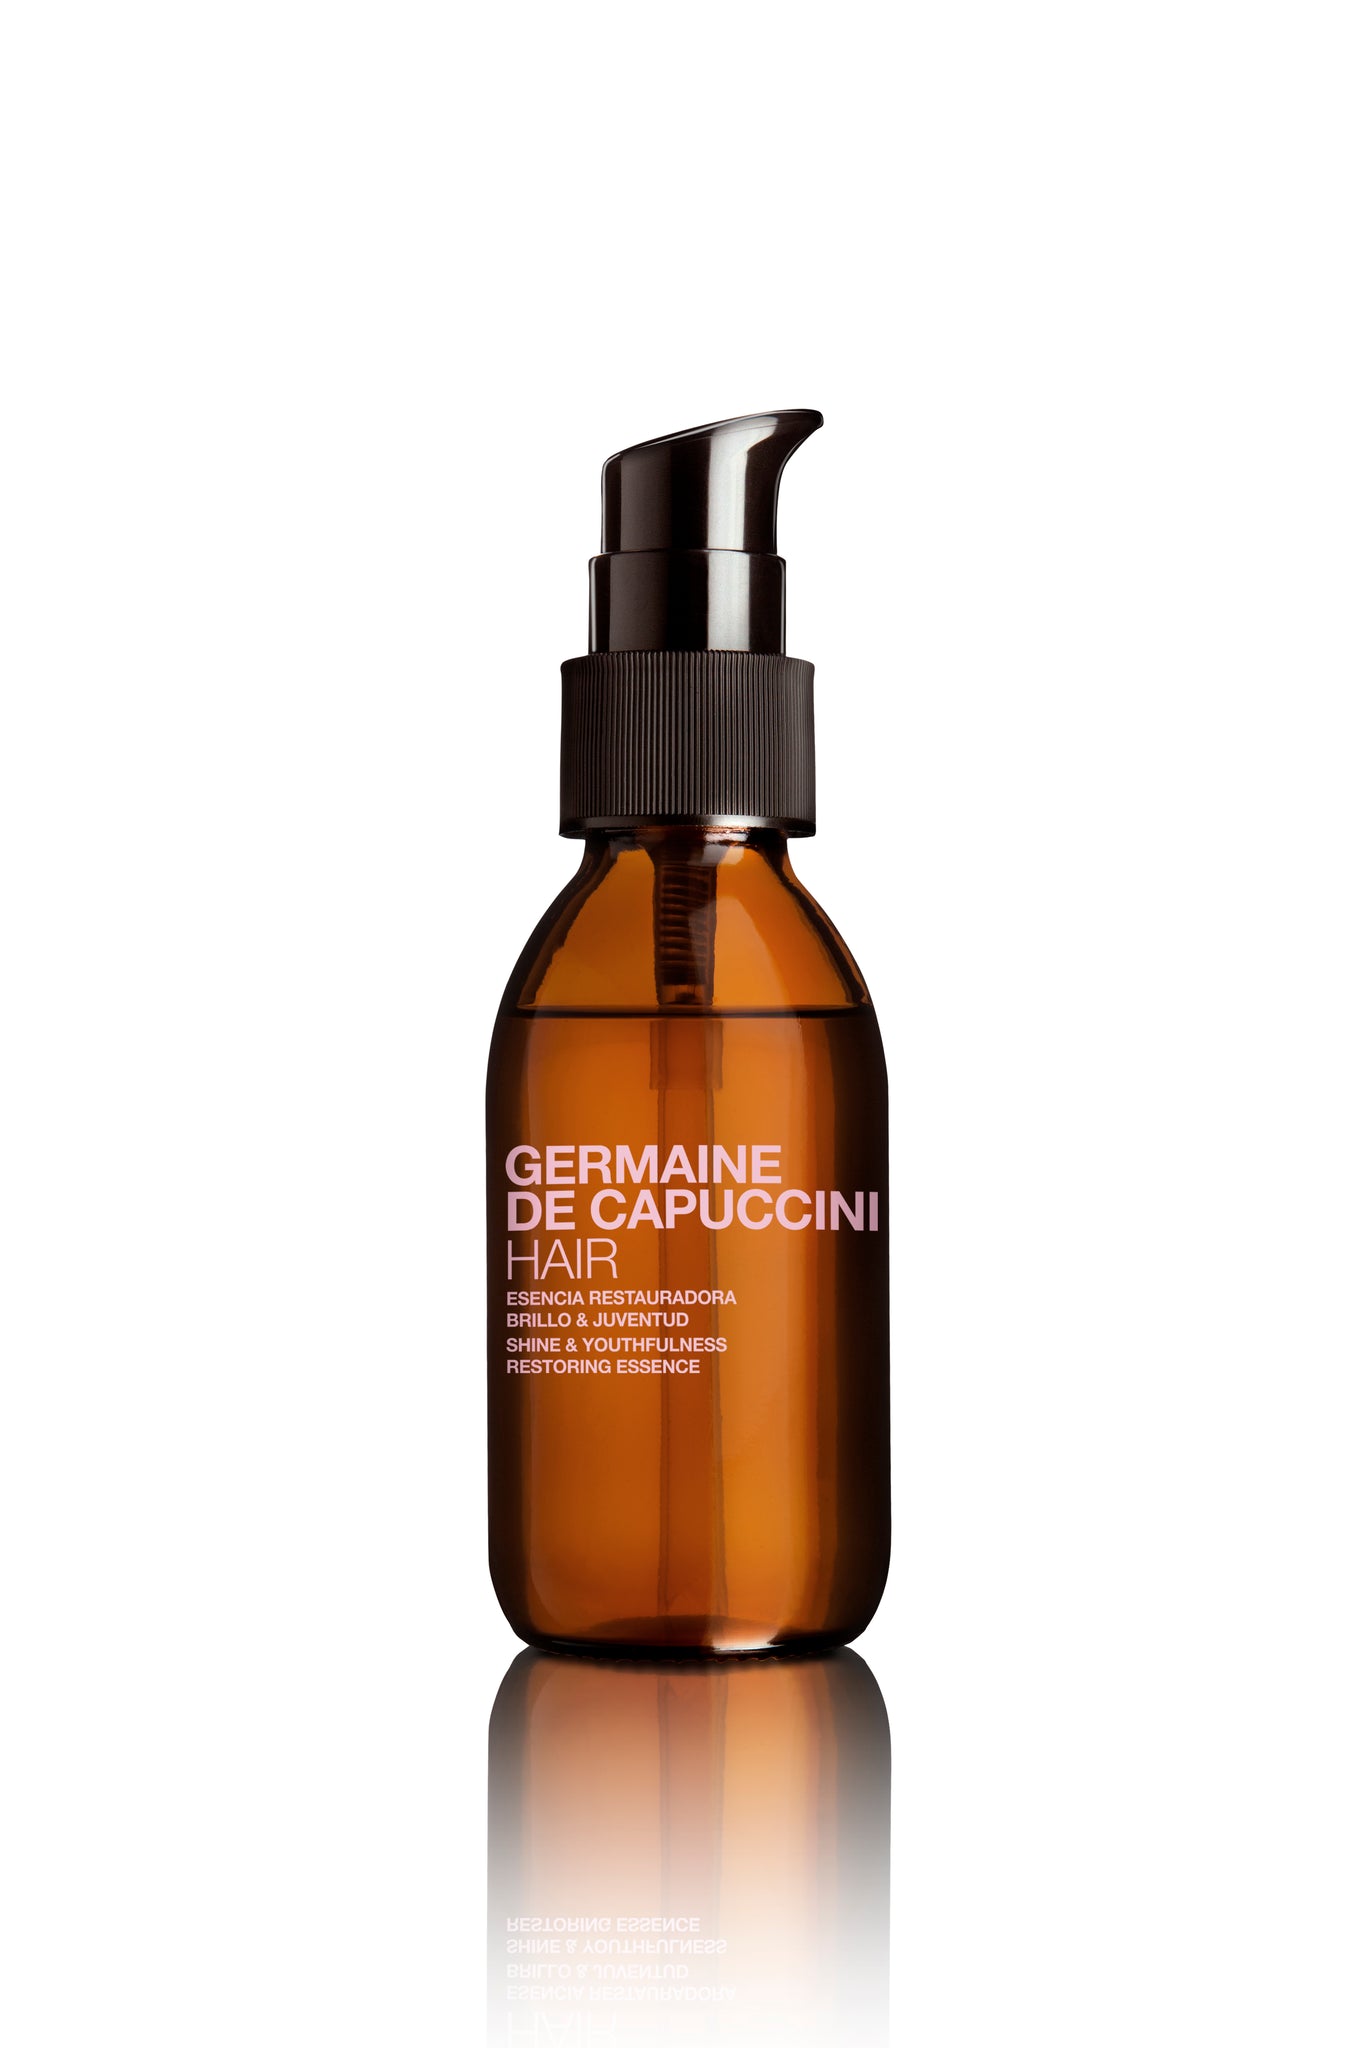 Germaine de Capuccini Hair & Shine & Youthfulness Hair Oil 100ml